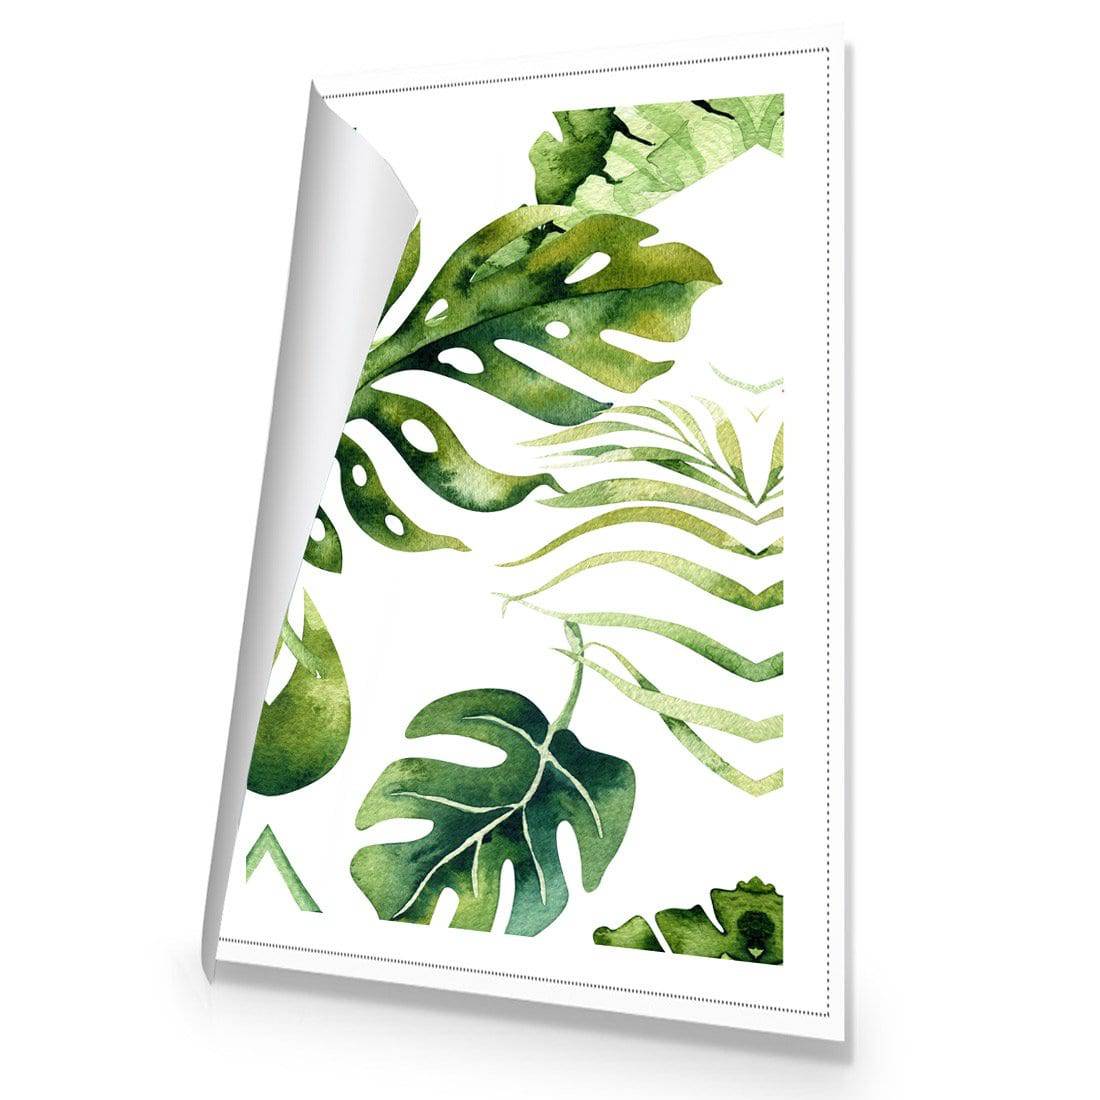 Fascinating Foliage Version 01 Canvas Art-Canvas-Wall Art Designs-45x30cm-Rolled Canvas-Wall Art Designs